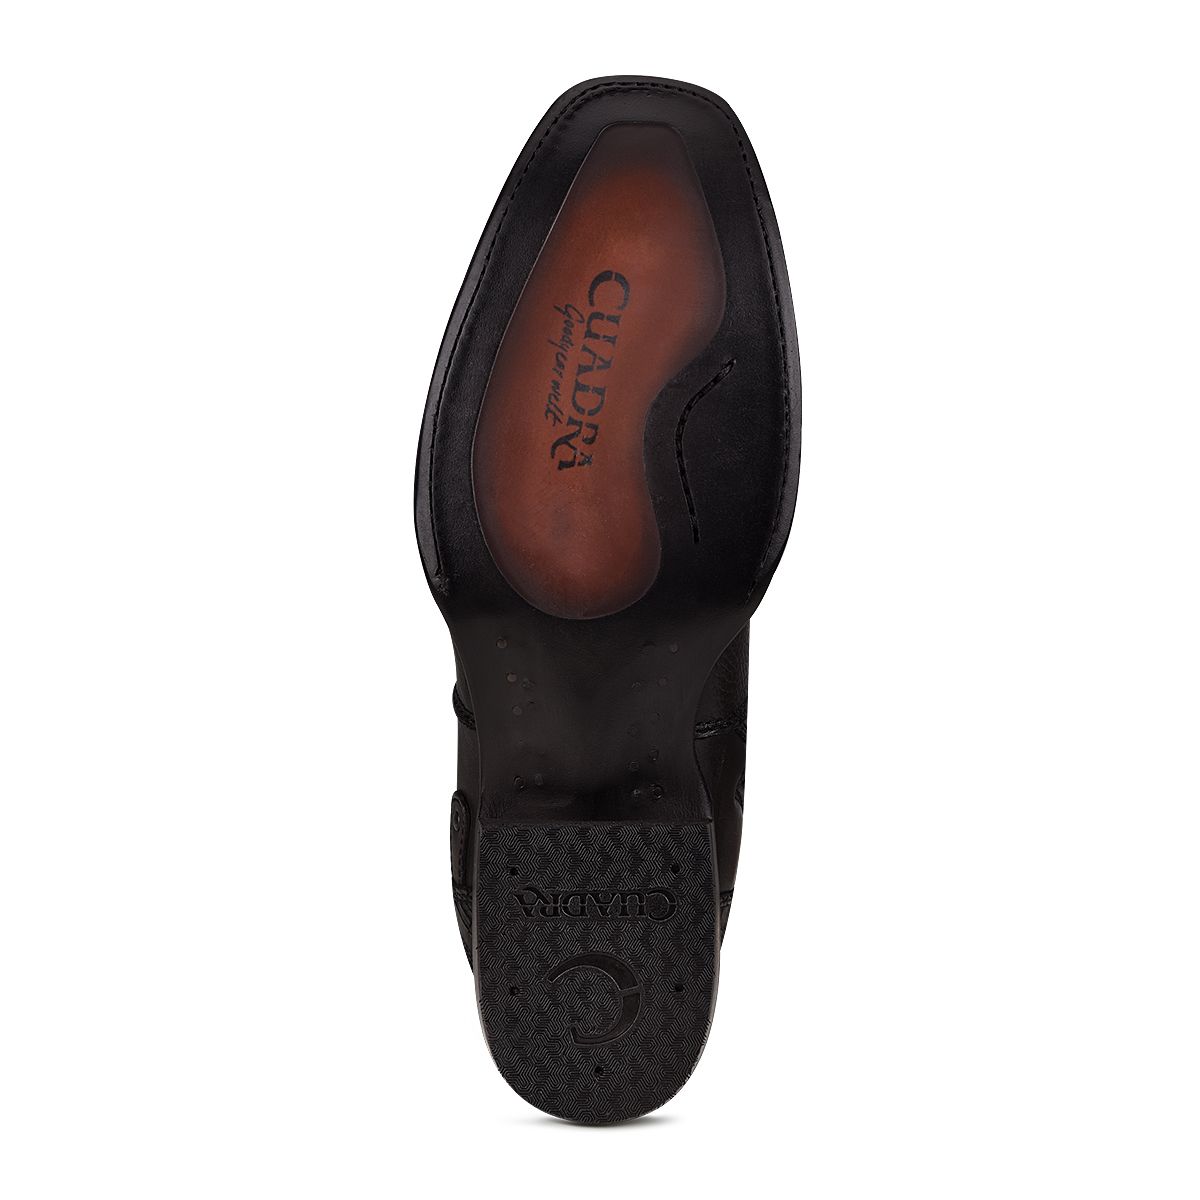 1J1VRS - Cuadra black casual fashion cowboy chelsea leather booties for men-Kuet.us